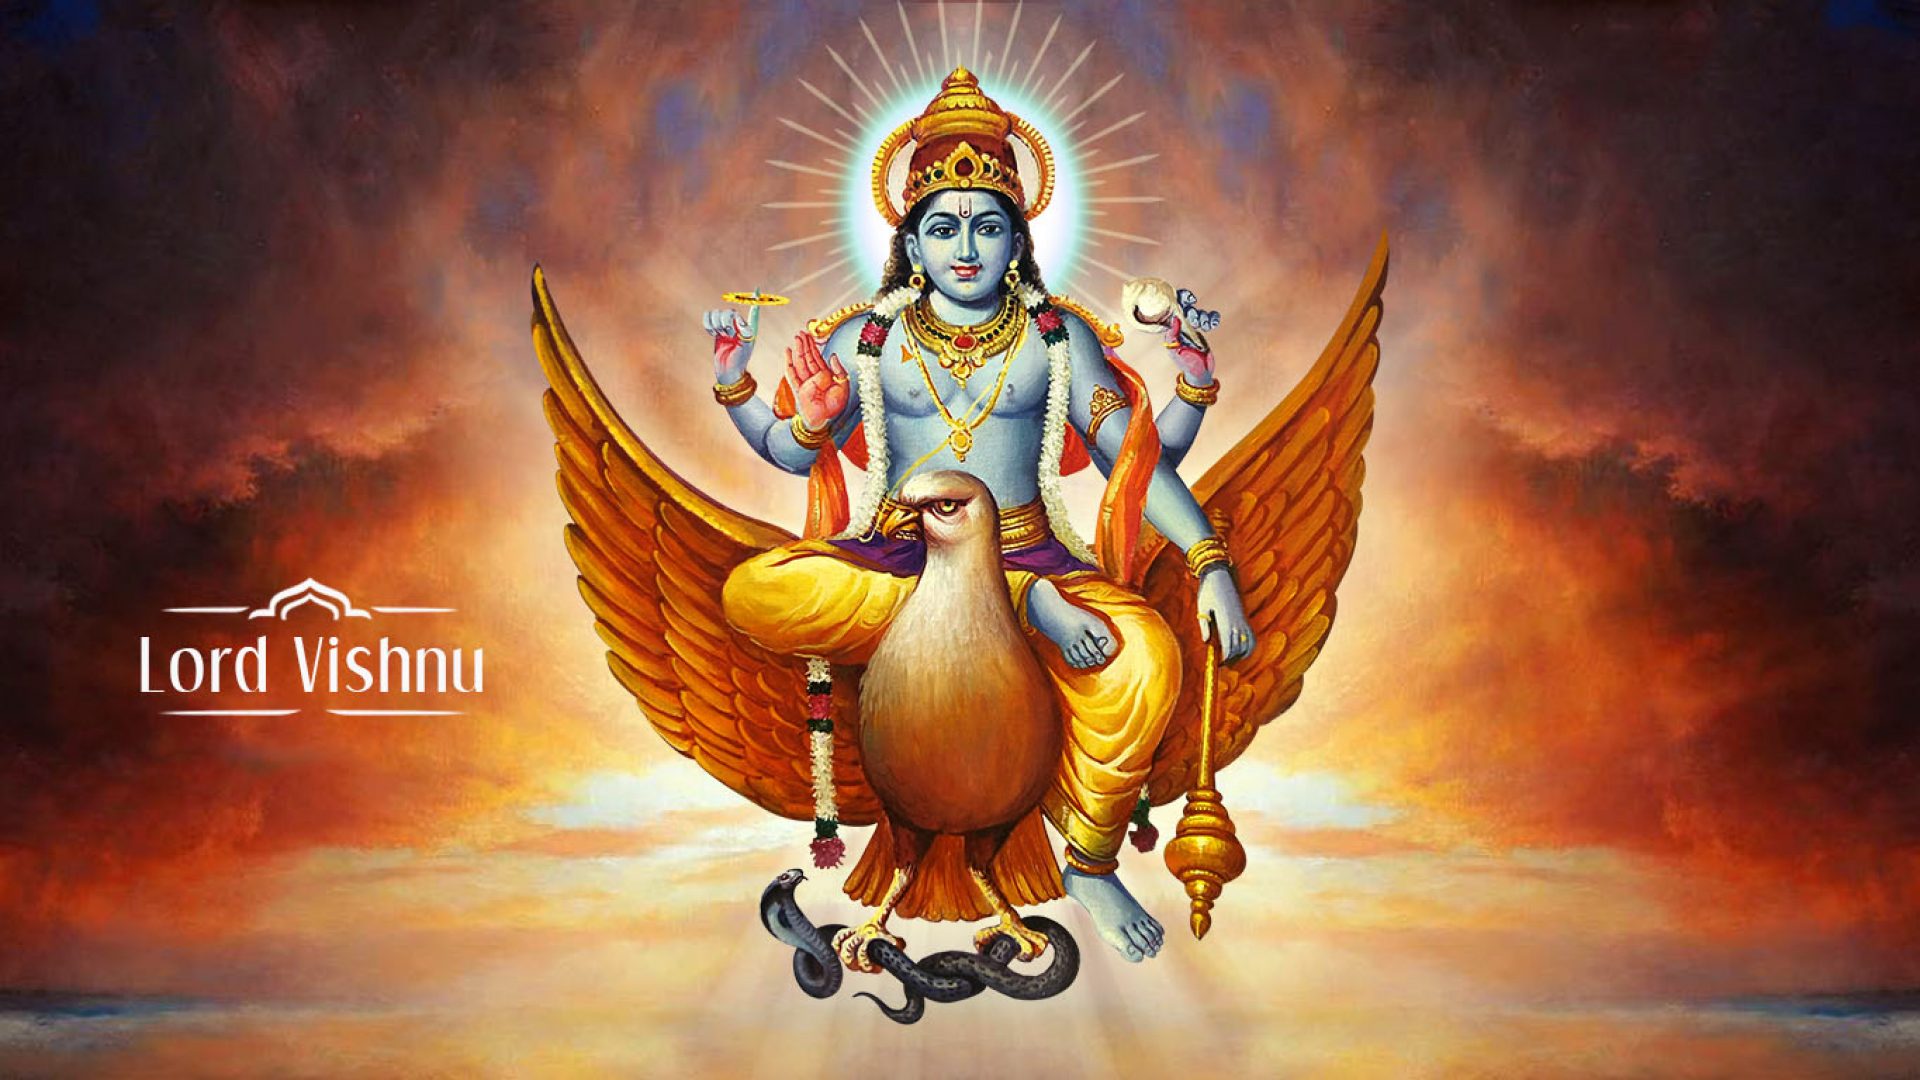 Lord Vishnu Wallpapers 6 | Hindu Gods and Goddesses